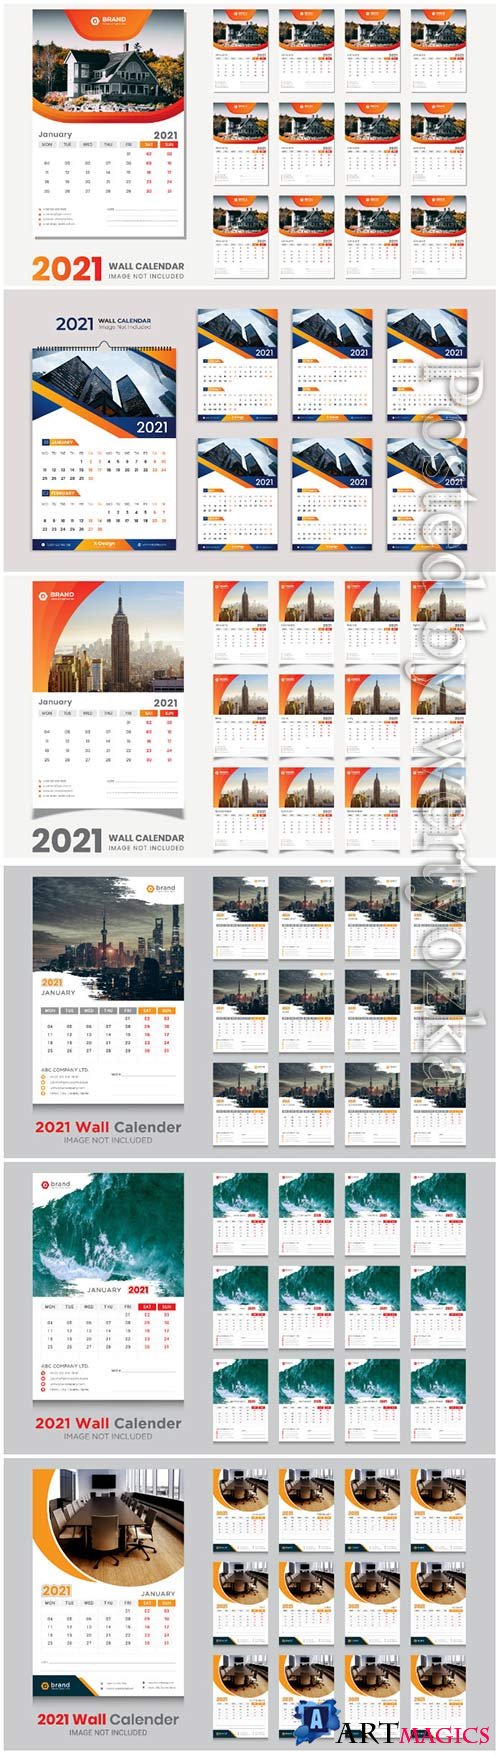 Desk calendar 2021 template design for new year vol 4